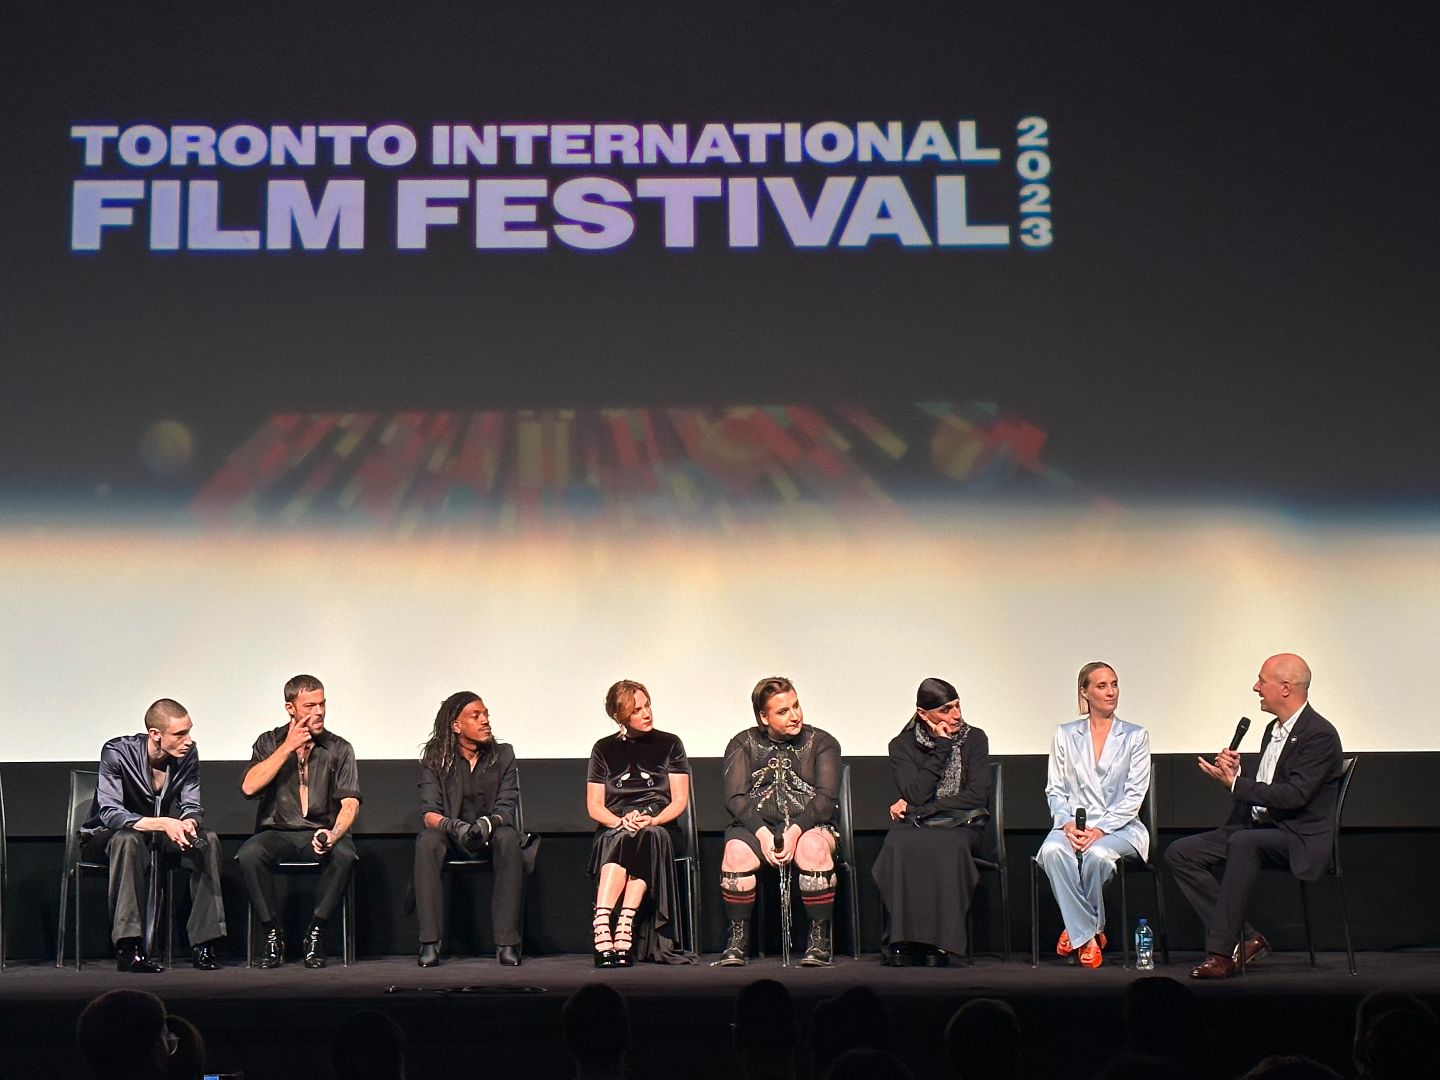 Panel on stage of Toronto Film Festival